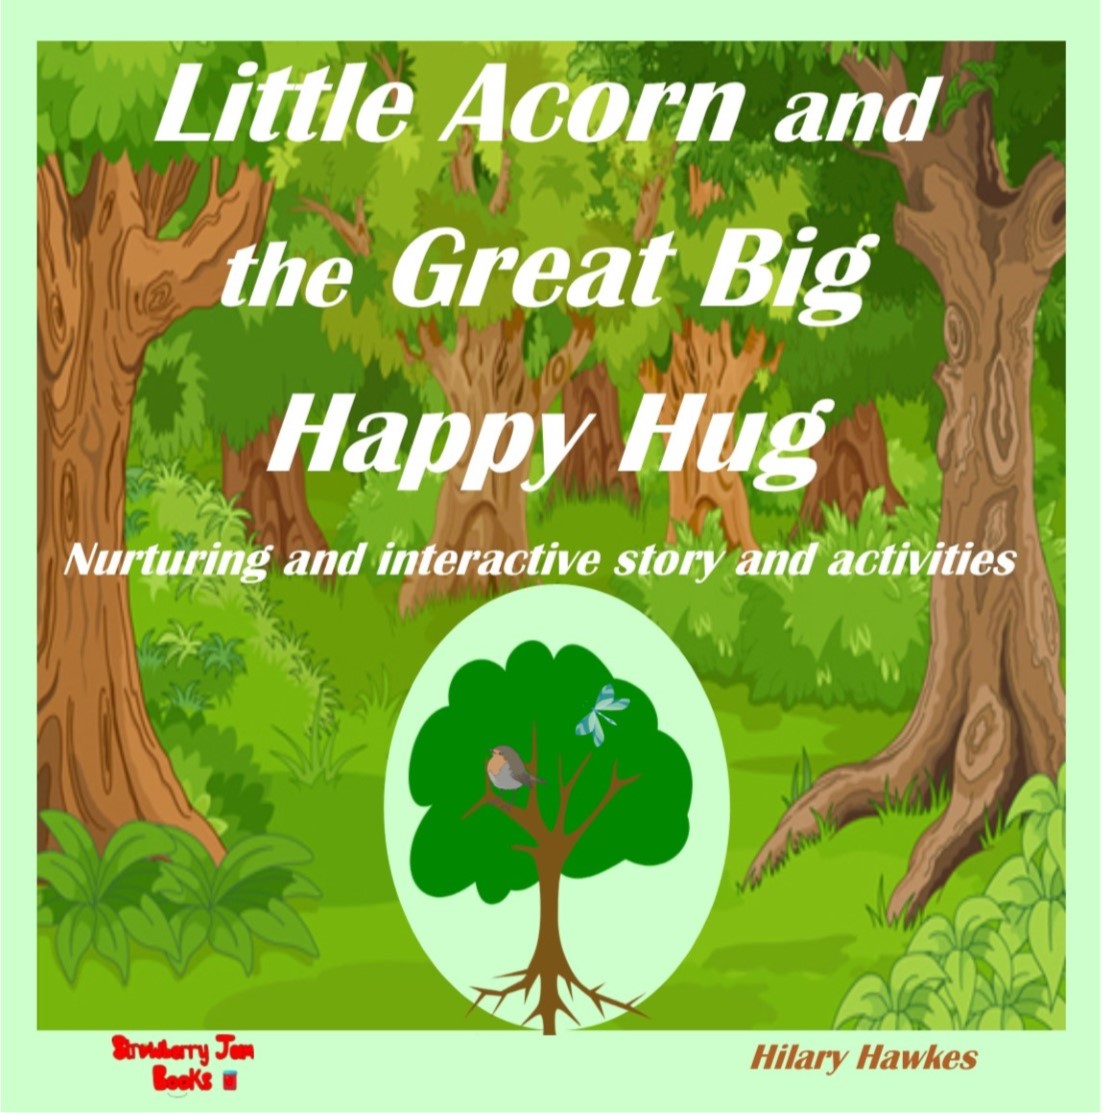 Little Acorn and The Great Big Happy Hug